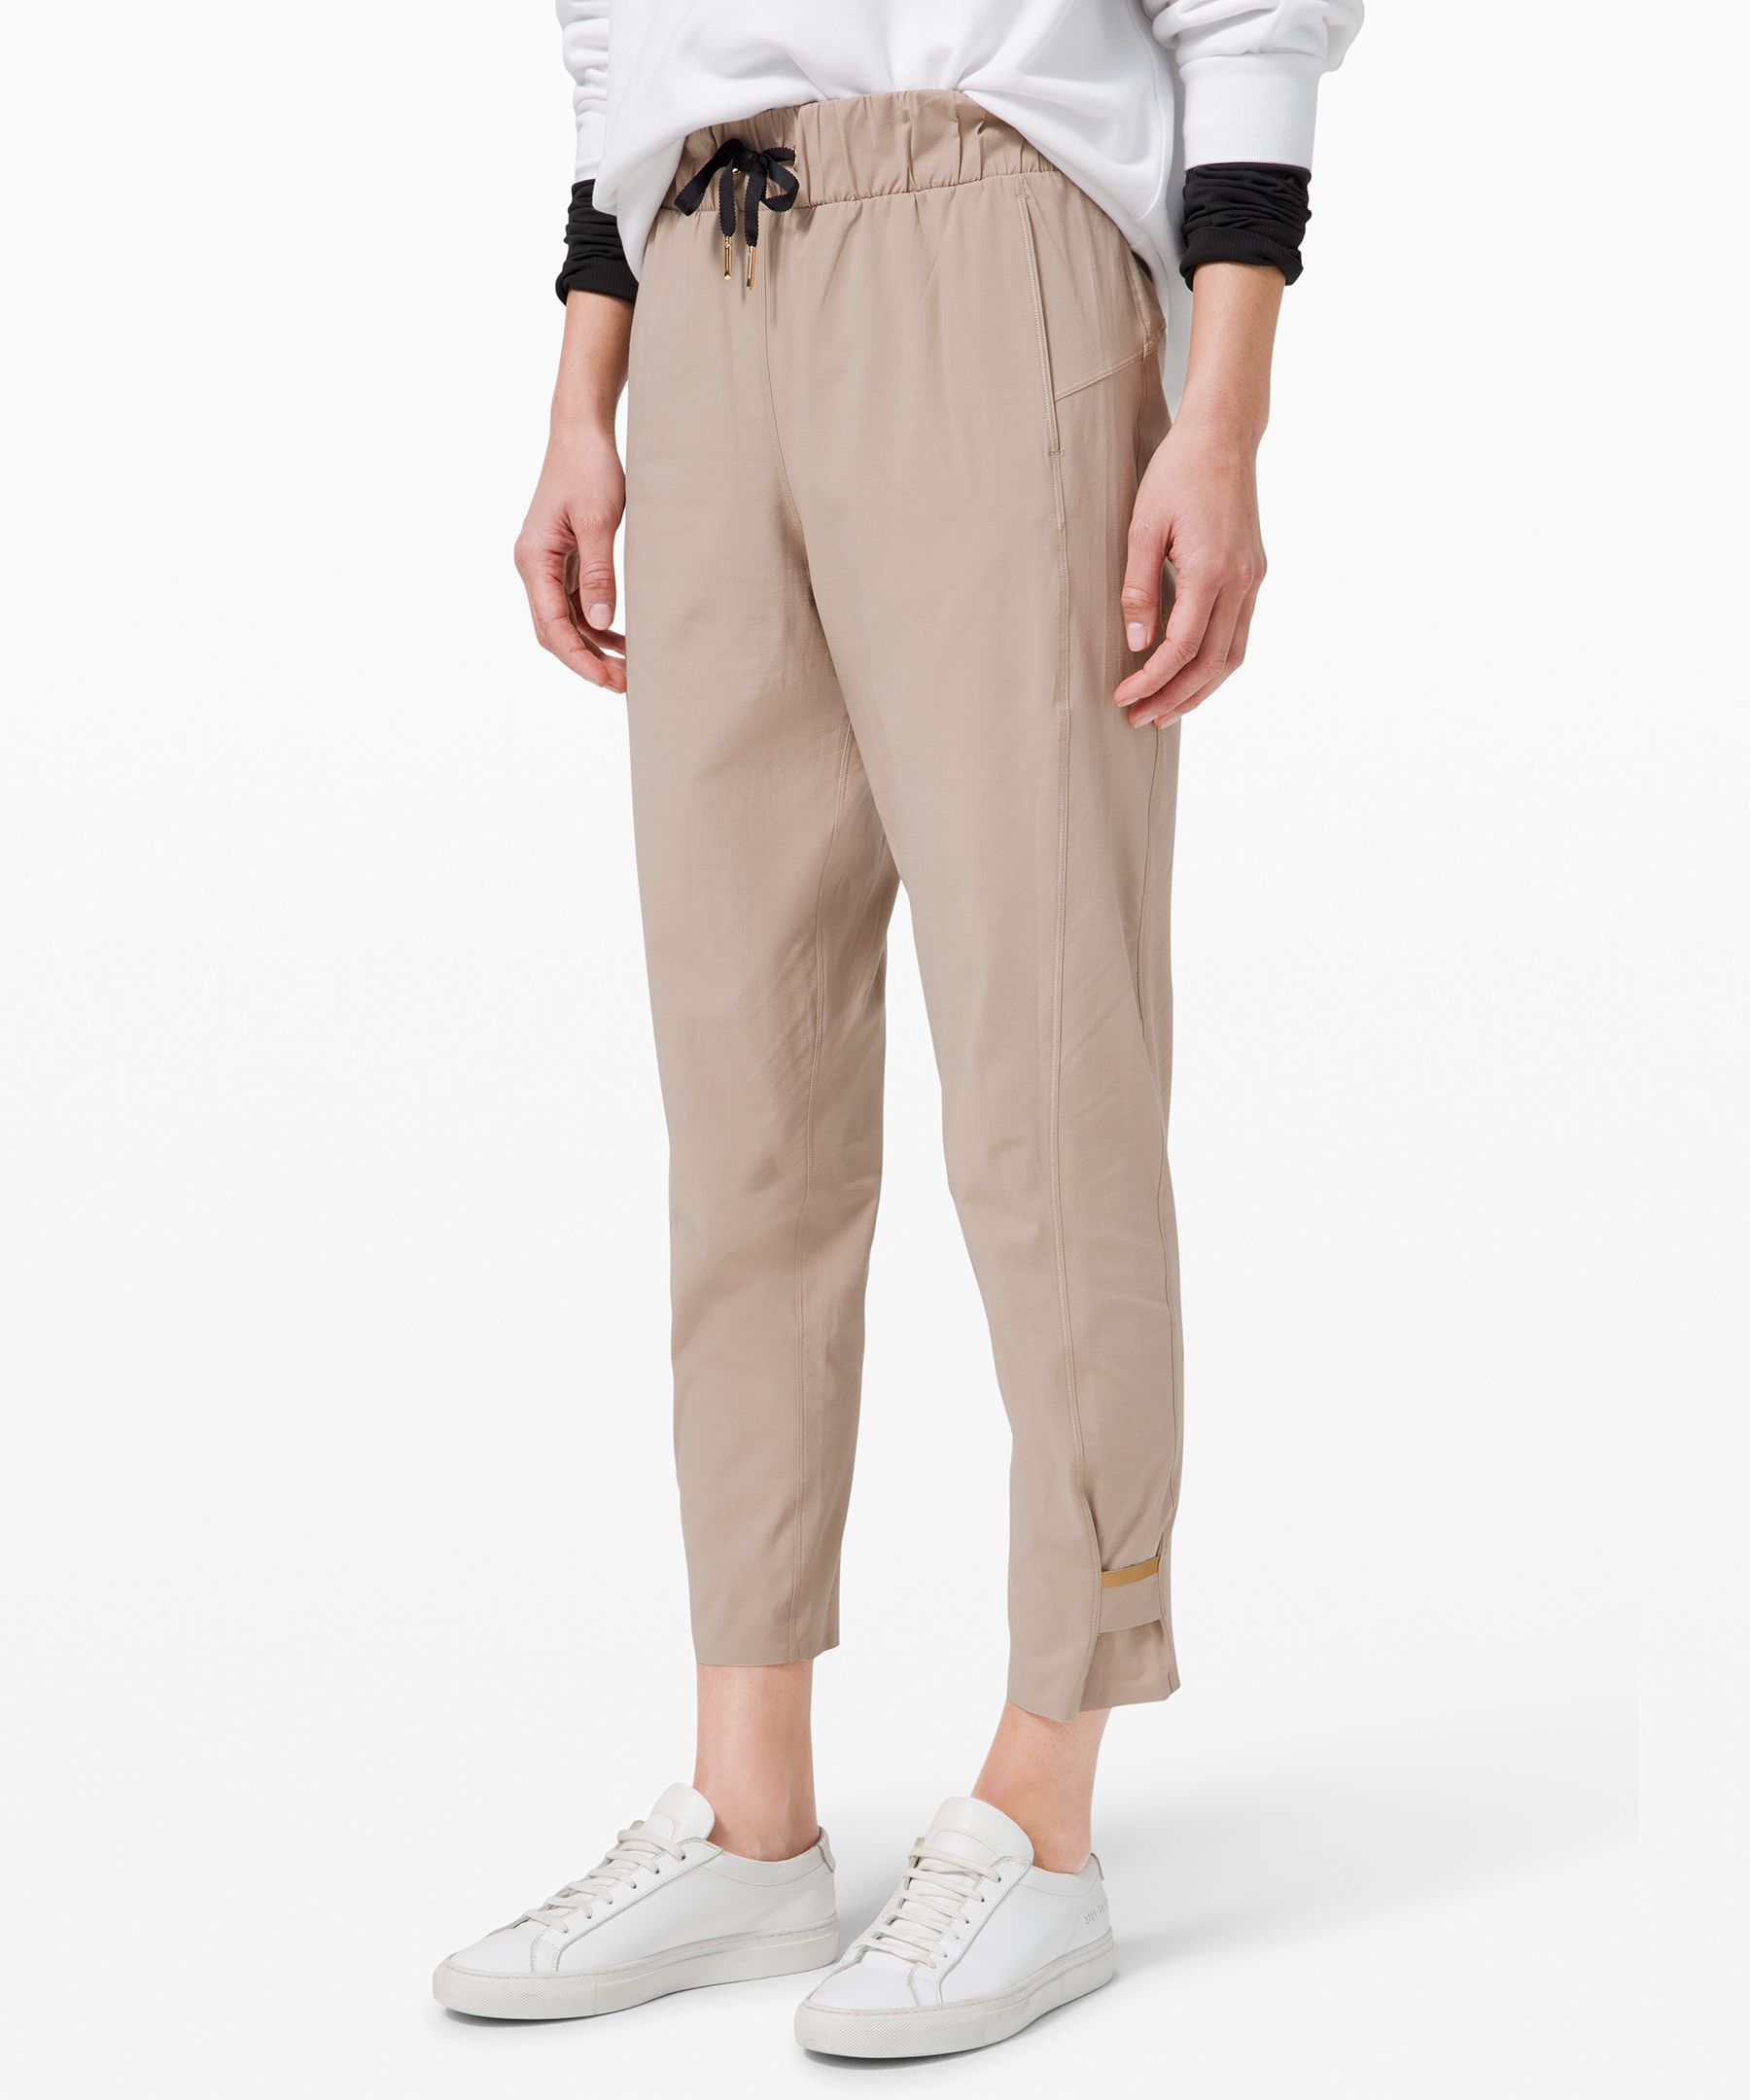 lululemon khaki leggings